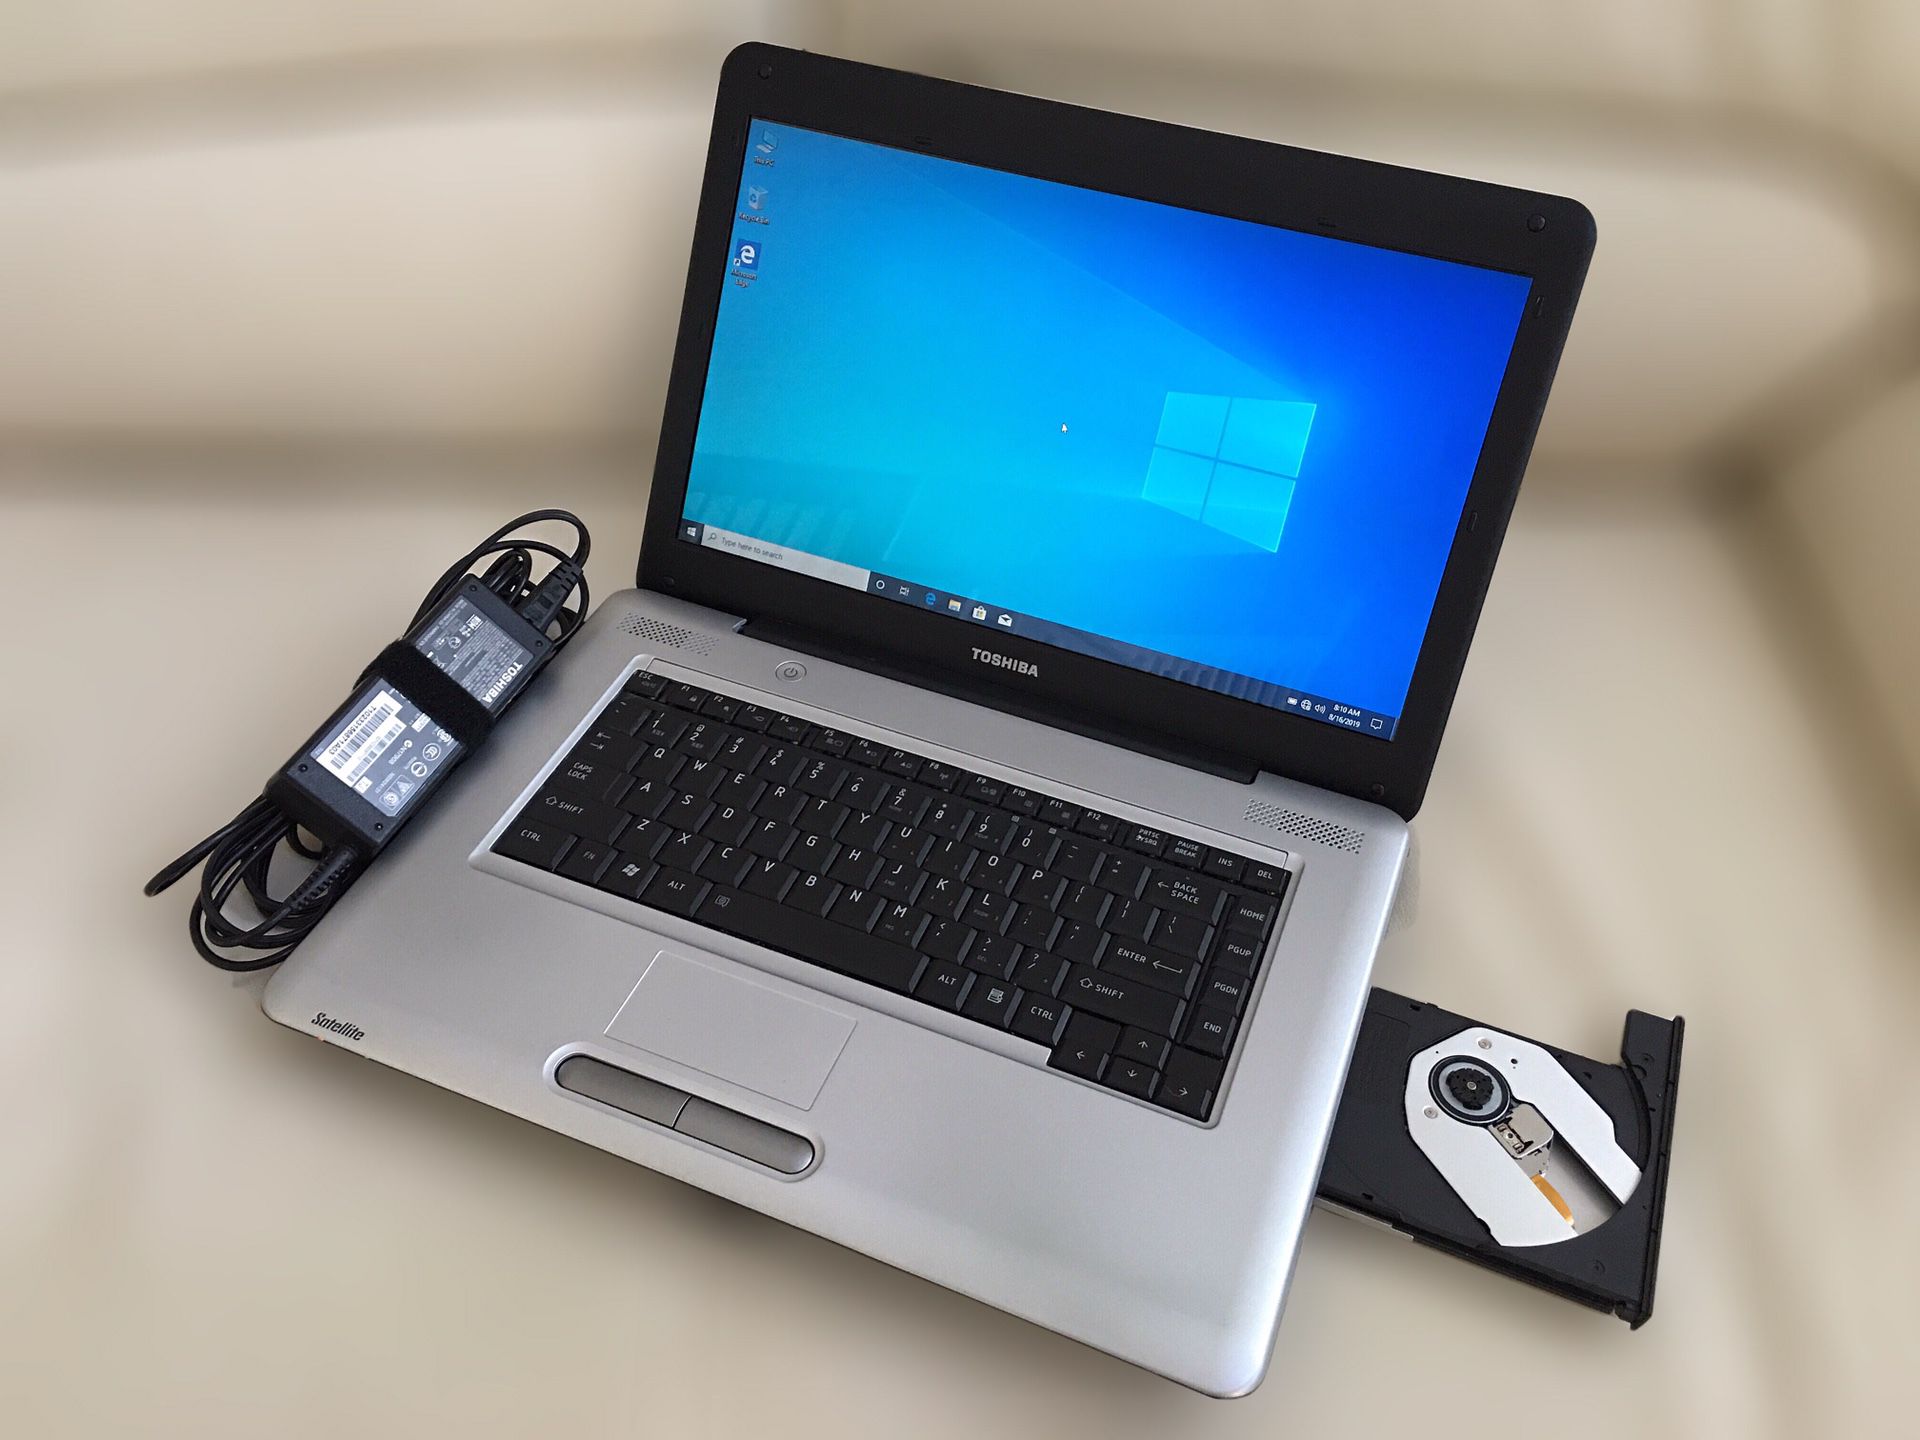 Toshiba laptop / Windows 10 / Antivirus / Charger